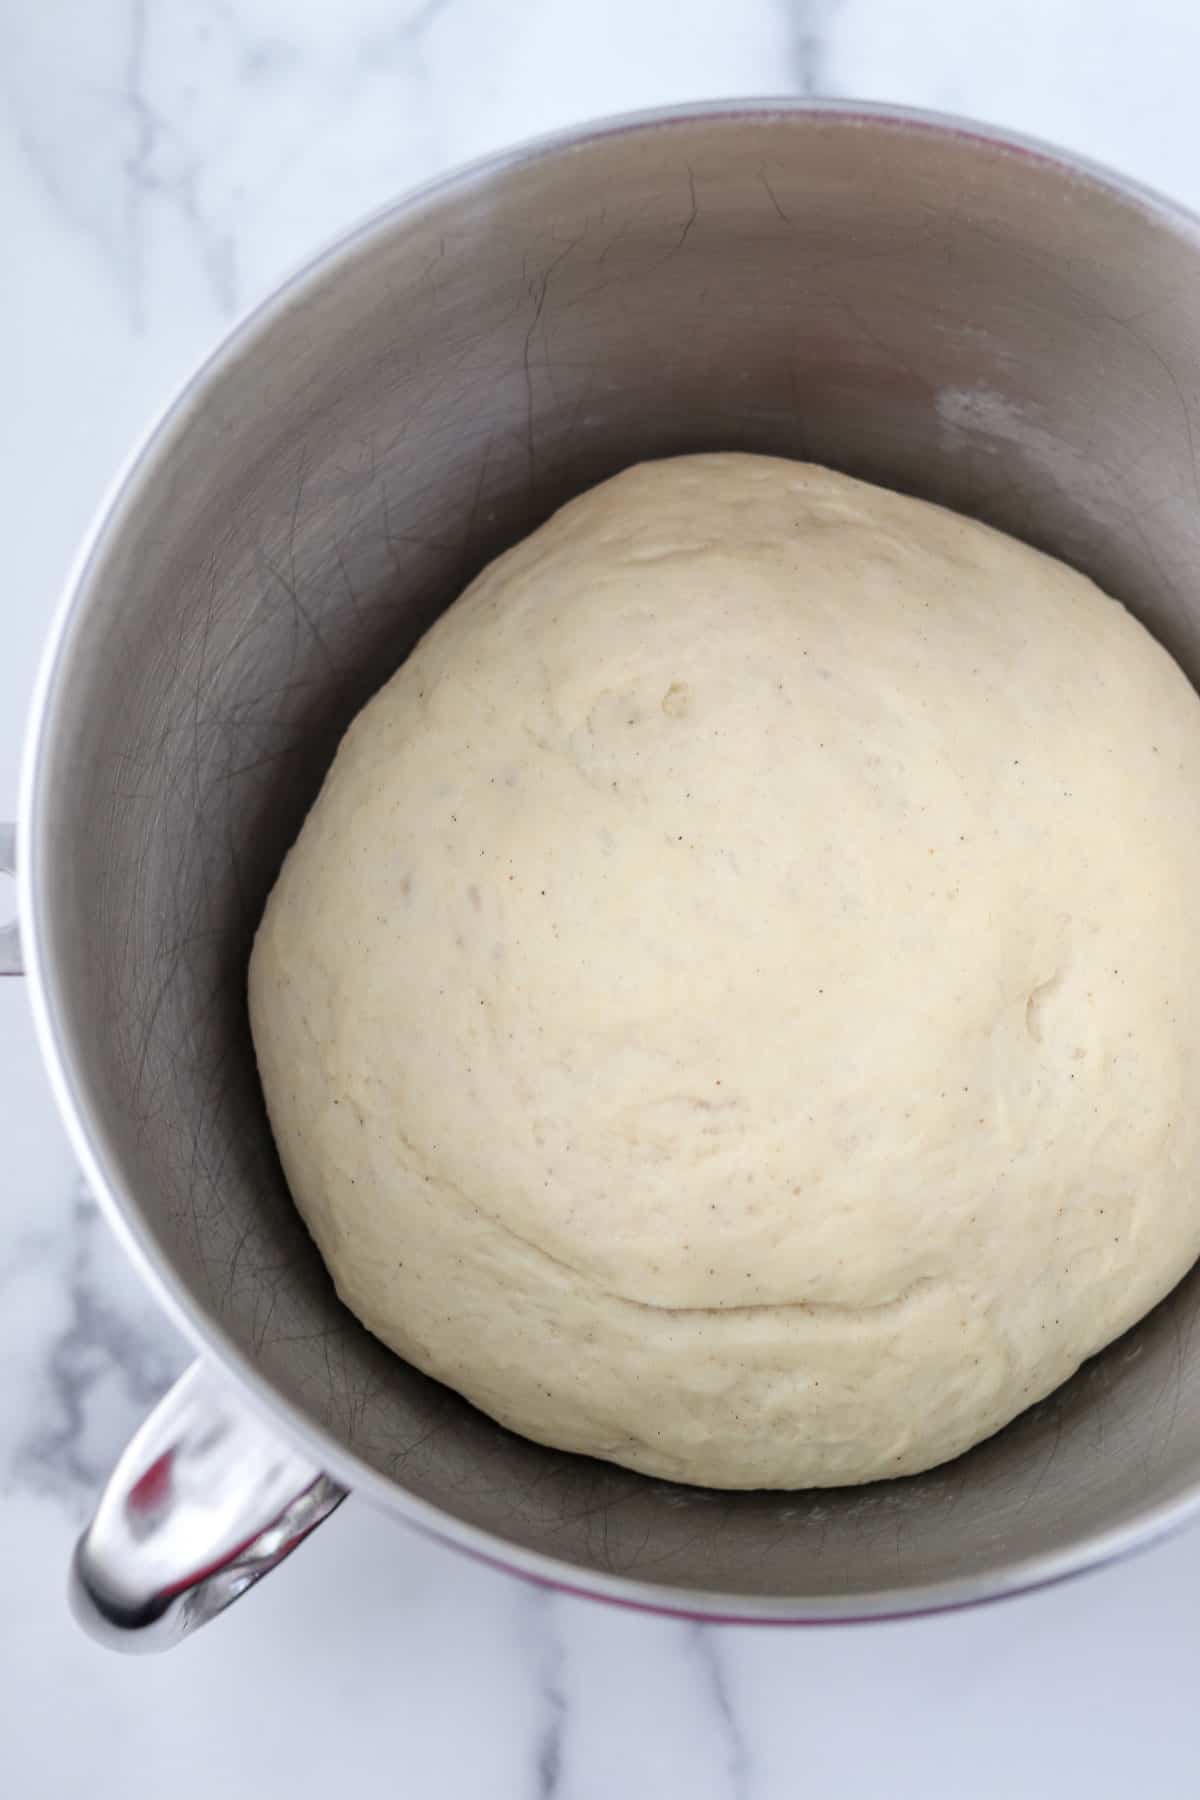 Bread dough in a metal bowl.